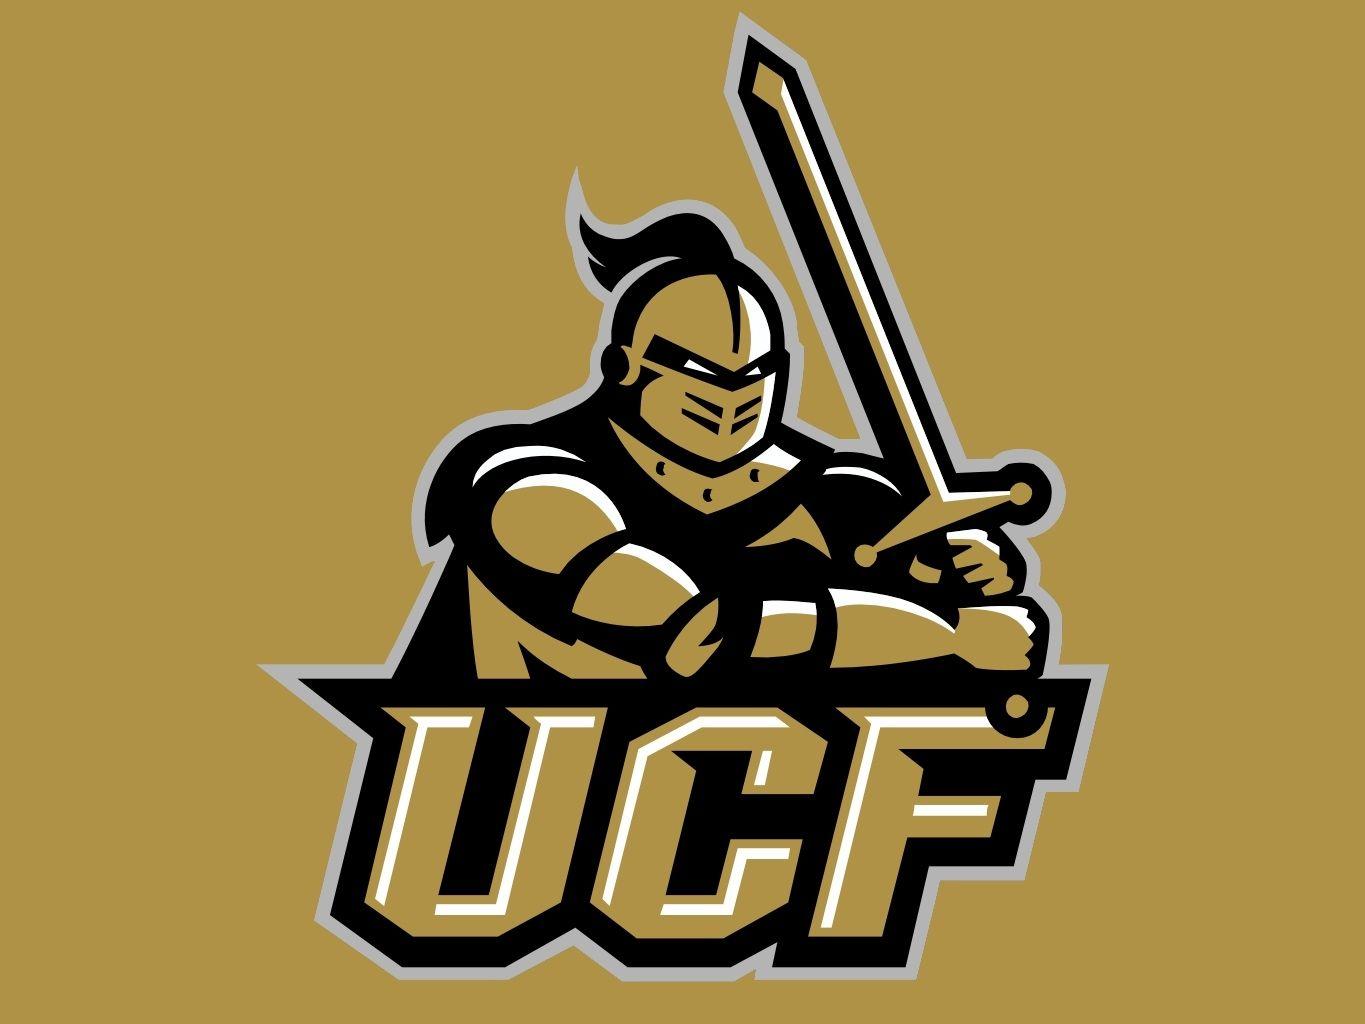 University of Central Florida Logo - Sheriff Preview: Central Florida